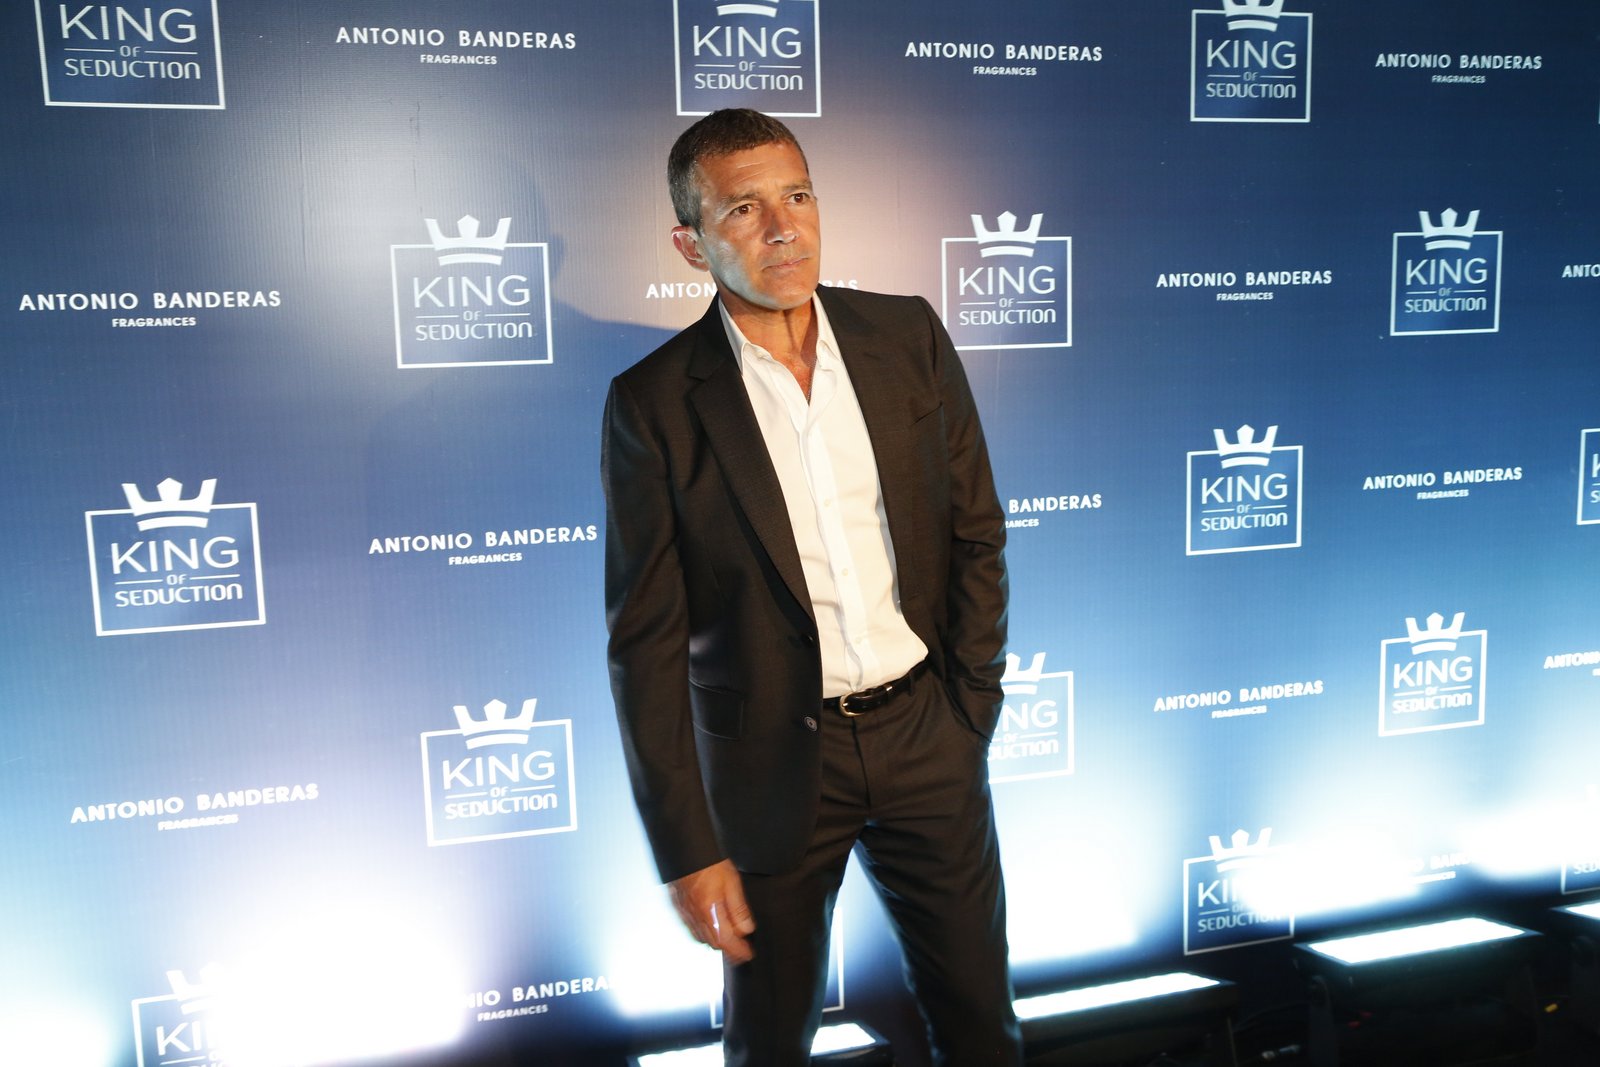 Antonio Banderas no lançamento de seu perfume King of Seduction